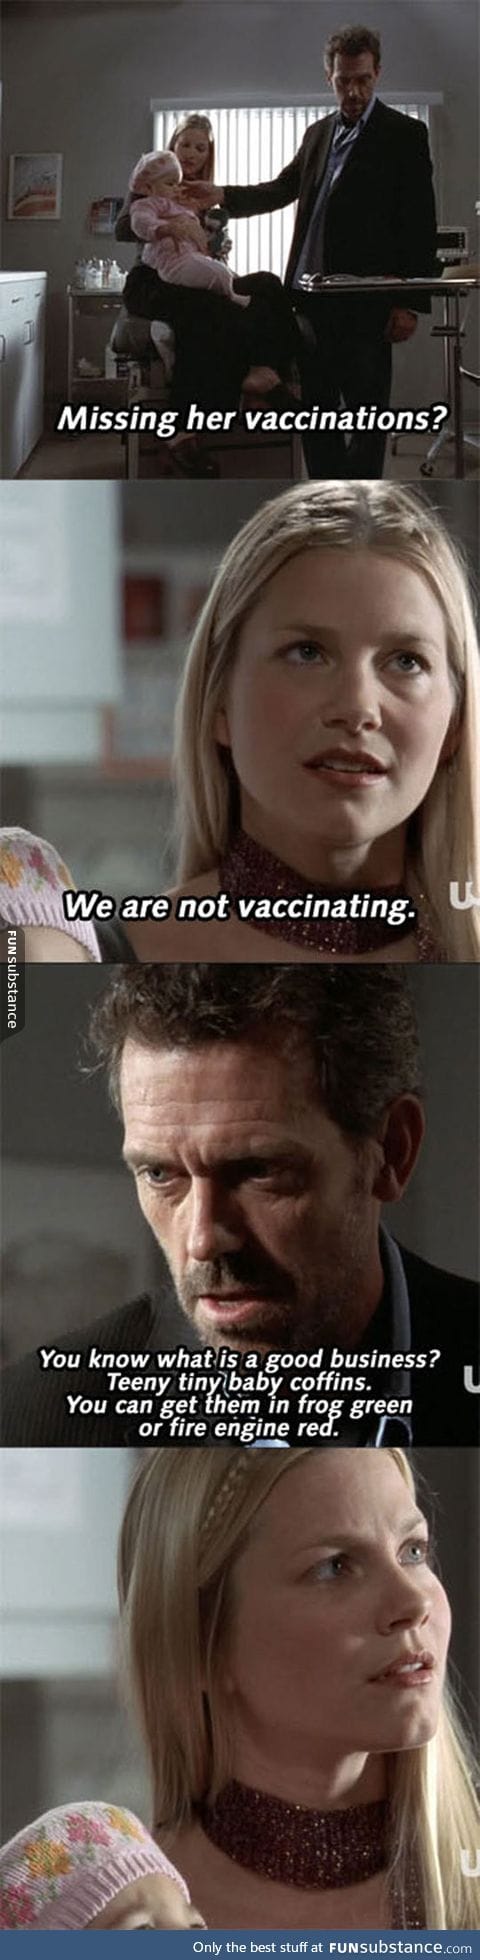 vaccine makes you gay meme